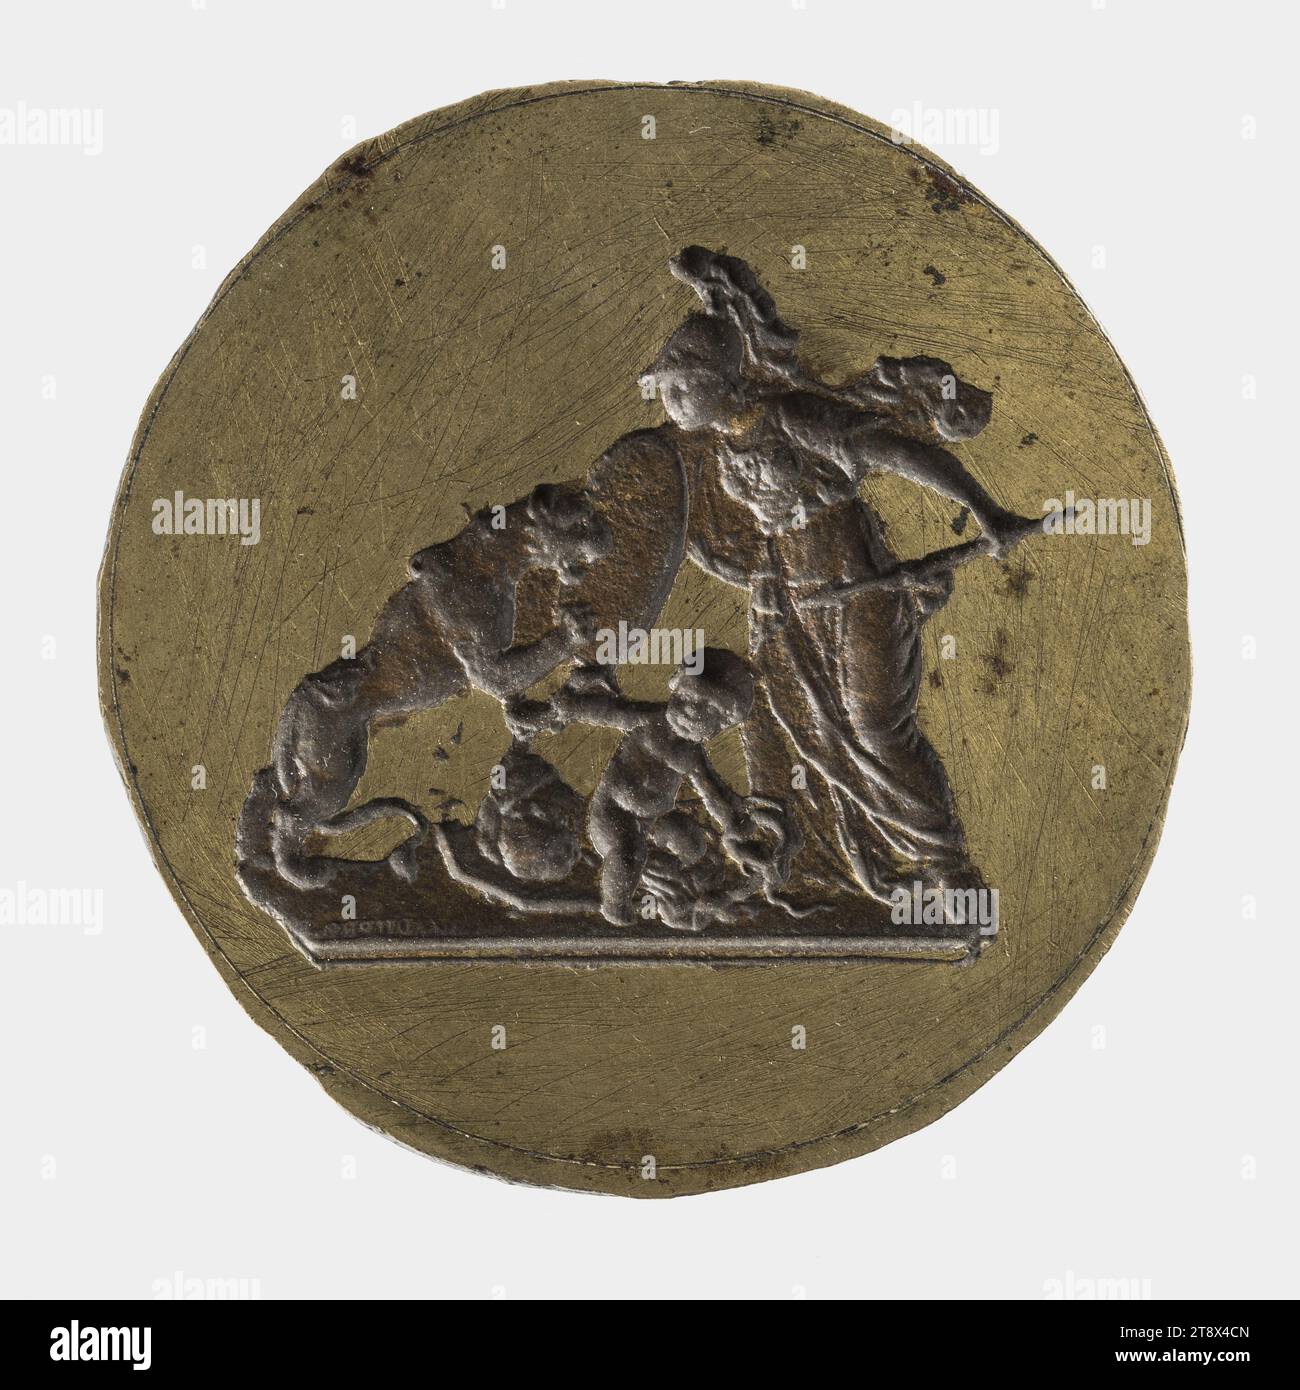 Coin: Libertas americana, 1783, Dupré, Augustin ou Auguste, Engraver in medals, Array, Numismatics, Coin - Hallmark, Metal, Dimensions - Work: Diameter: 5.1 cm, Weight (type dimension): 73.62 g Stock Photo